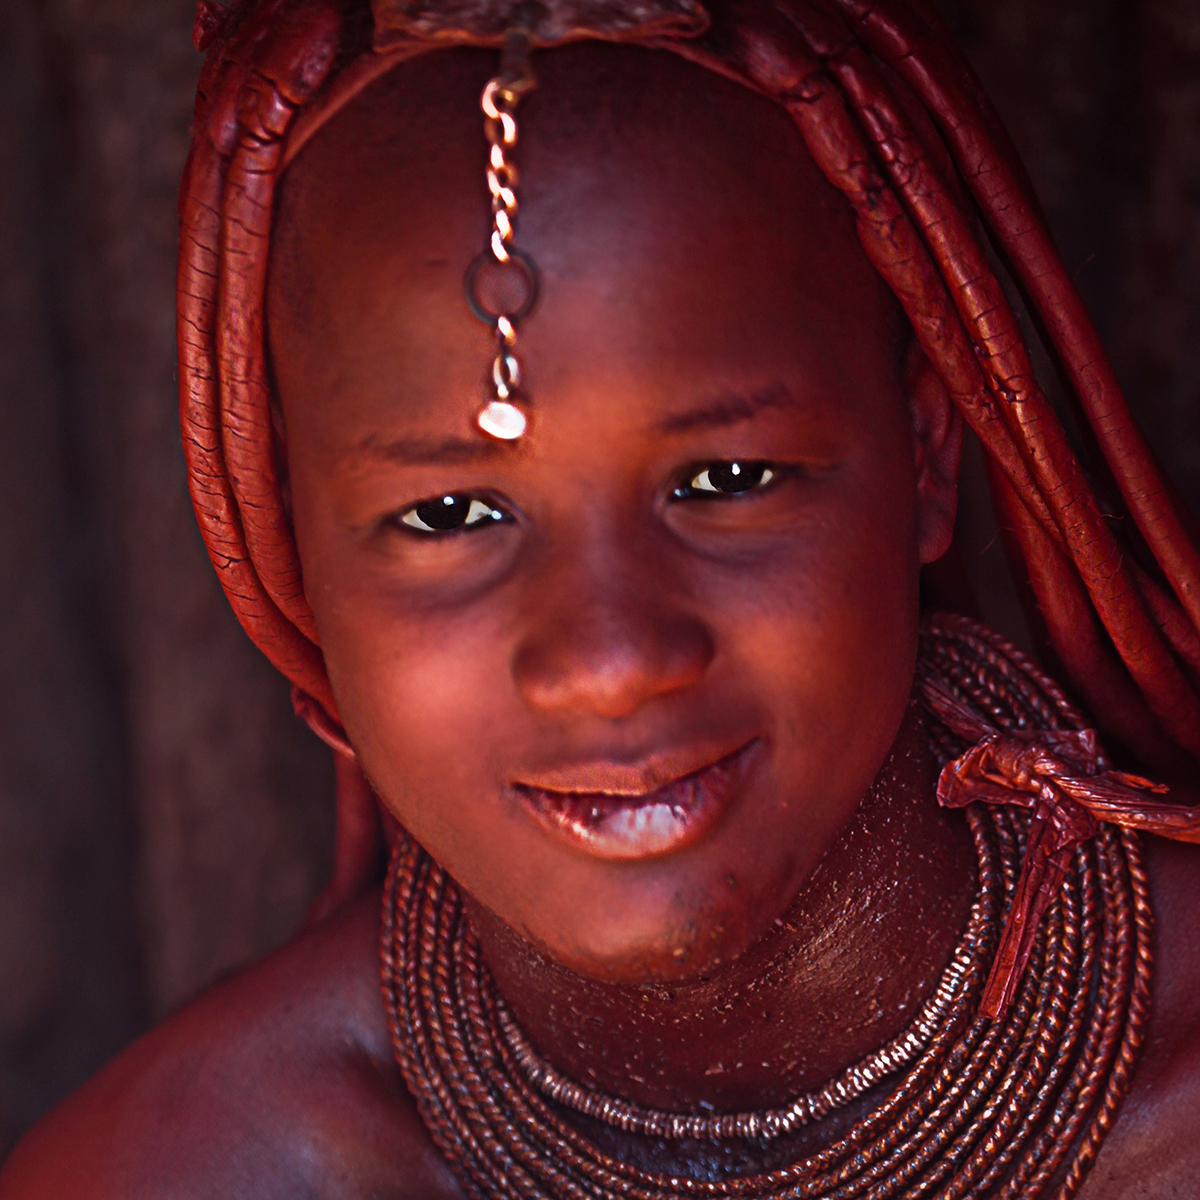 Tribe himba black. Химба Намибия. Племя Химба. Люди Химба. Красавицы племени Химба.